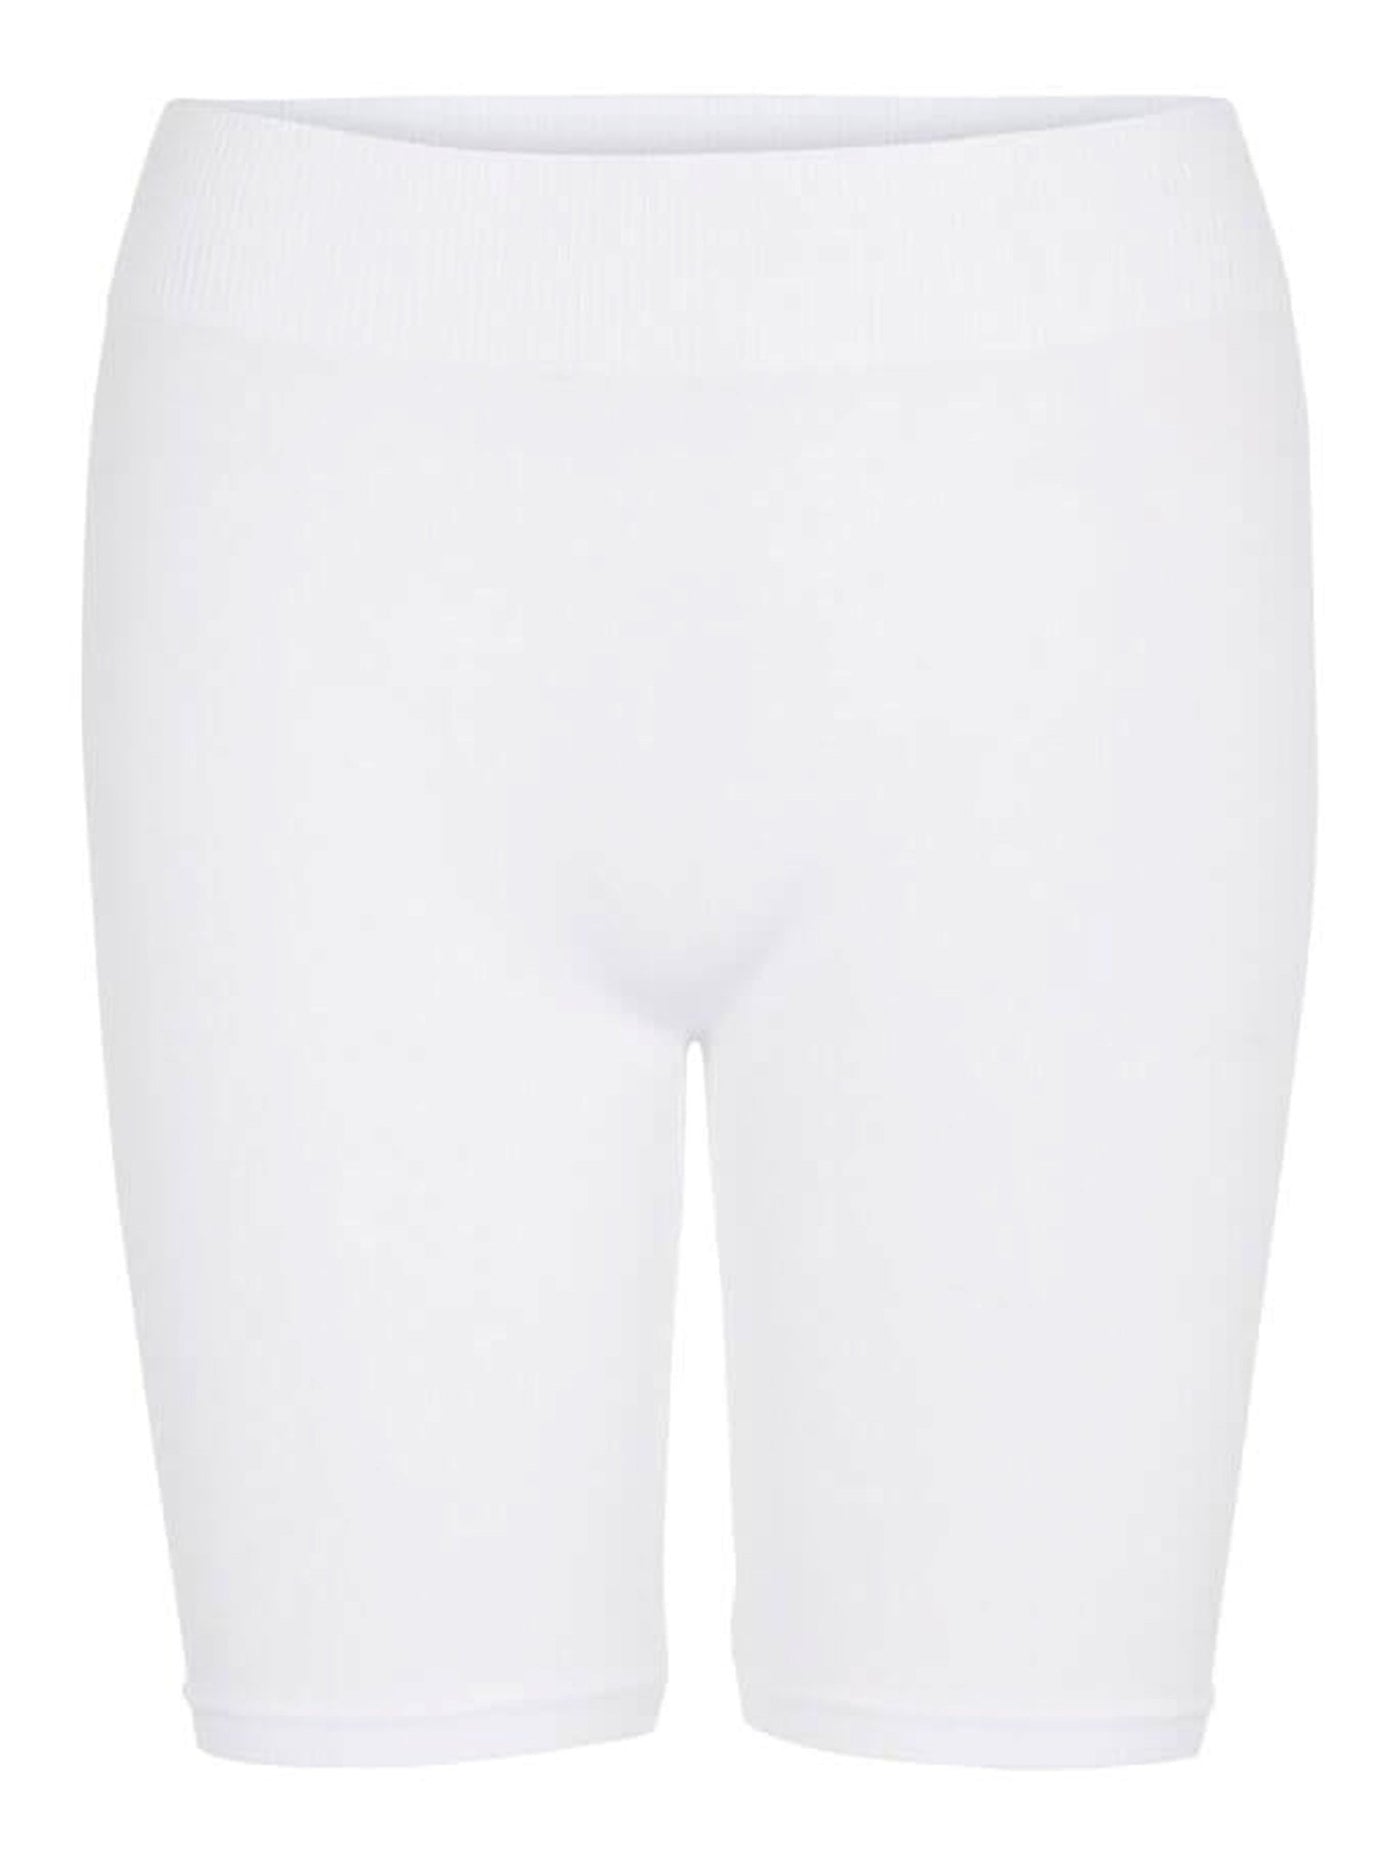 London midi shorts - Hvid - PIECES - Hvid